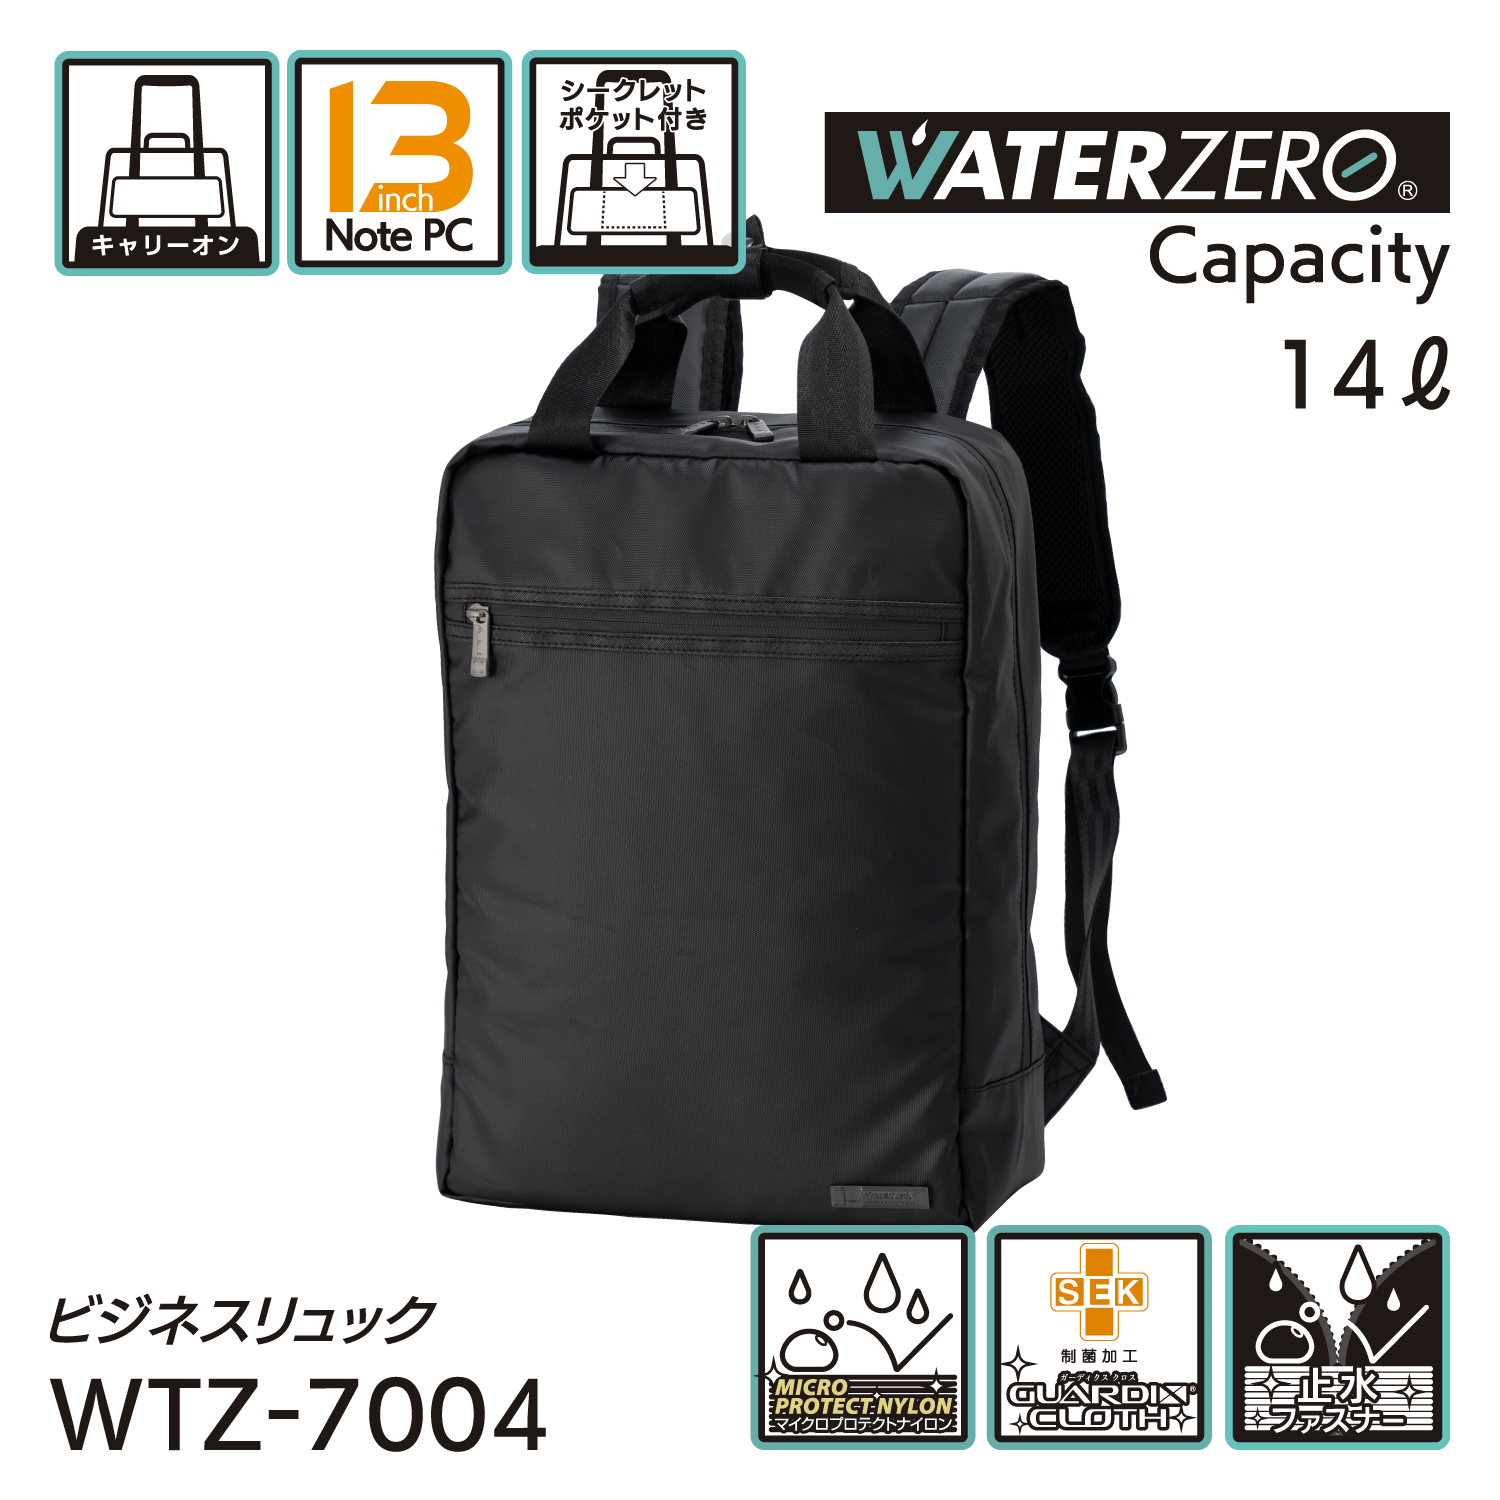 WATER ZERO | アジア・ラゲージ 公式サイト | Asia Luggage Inc.